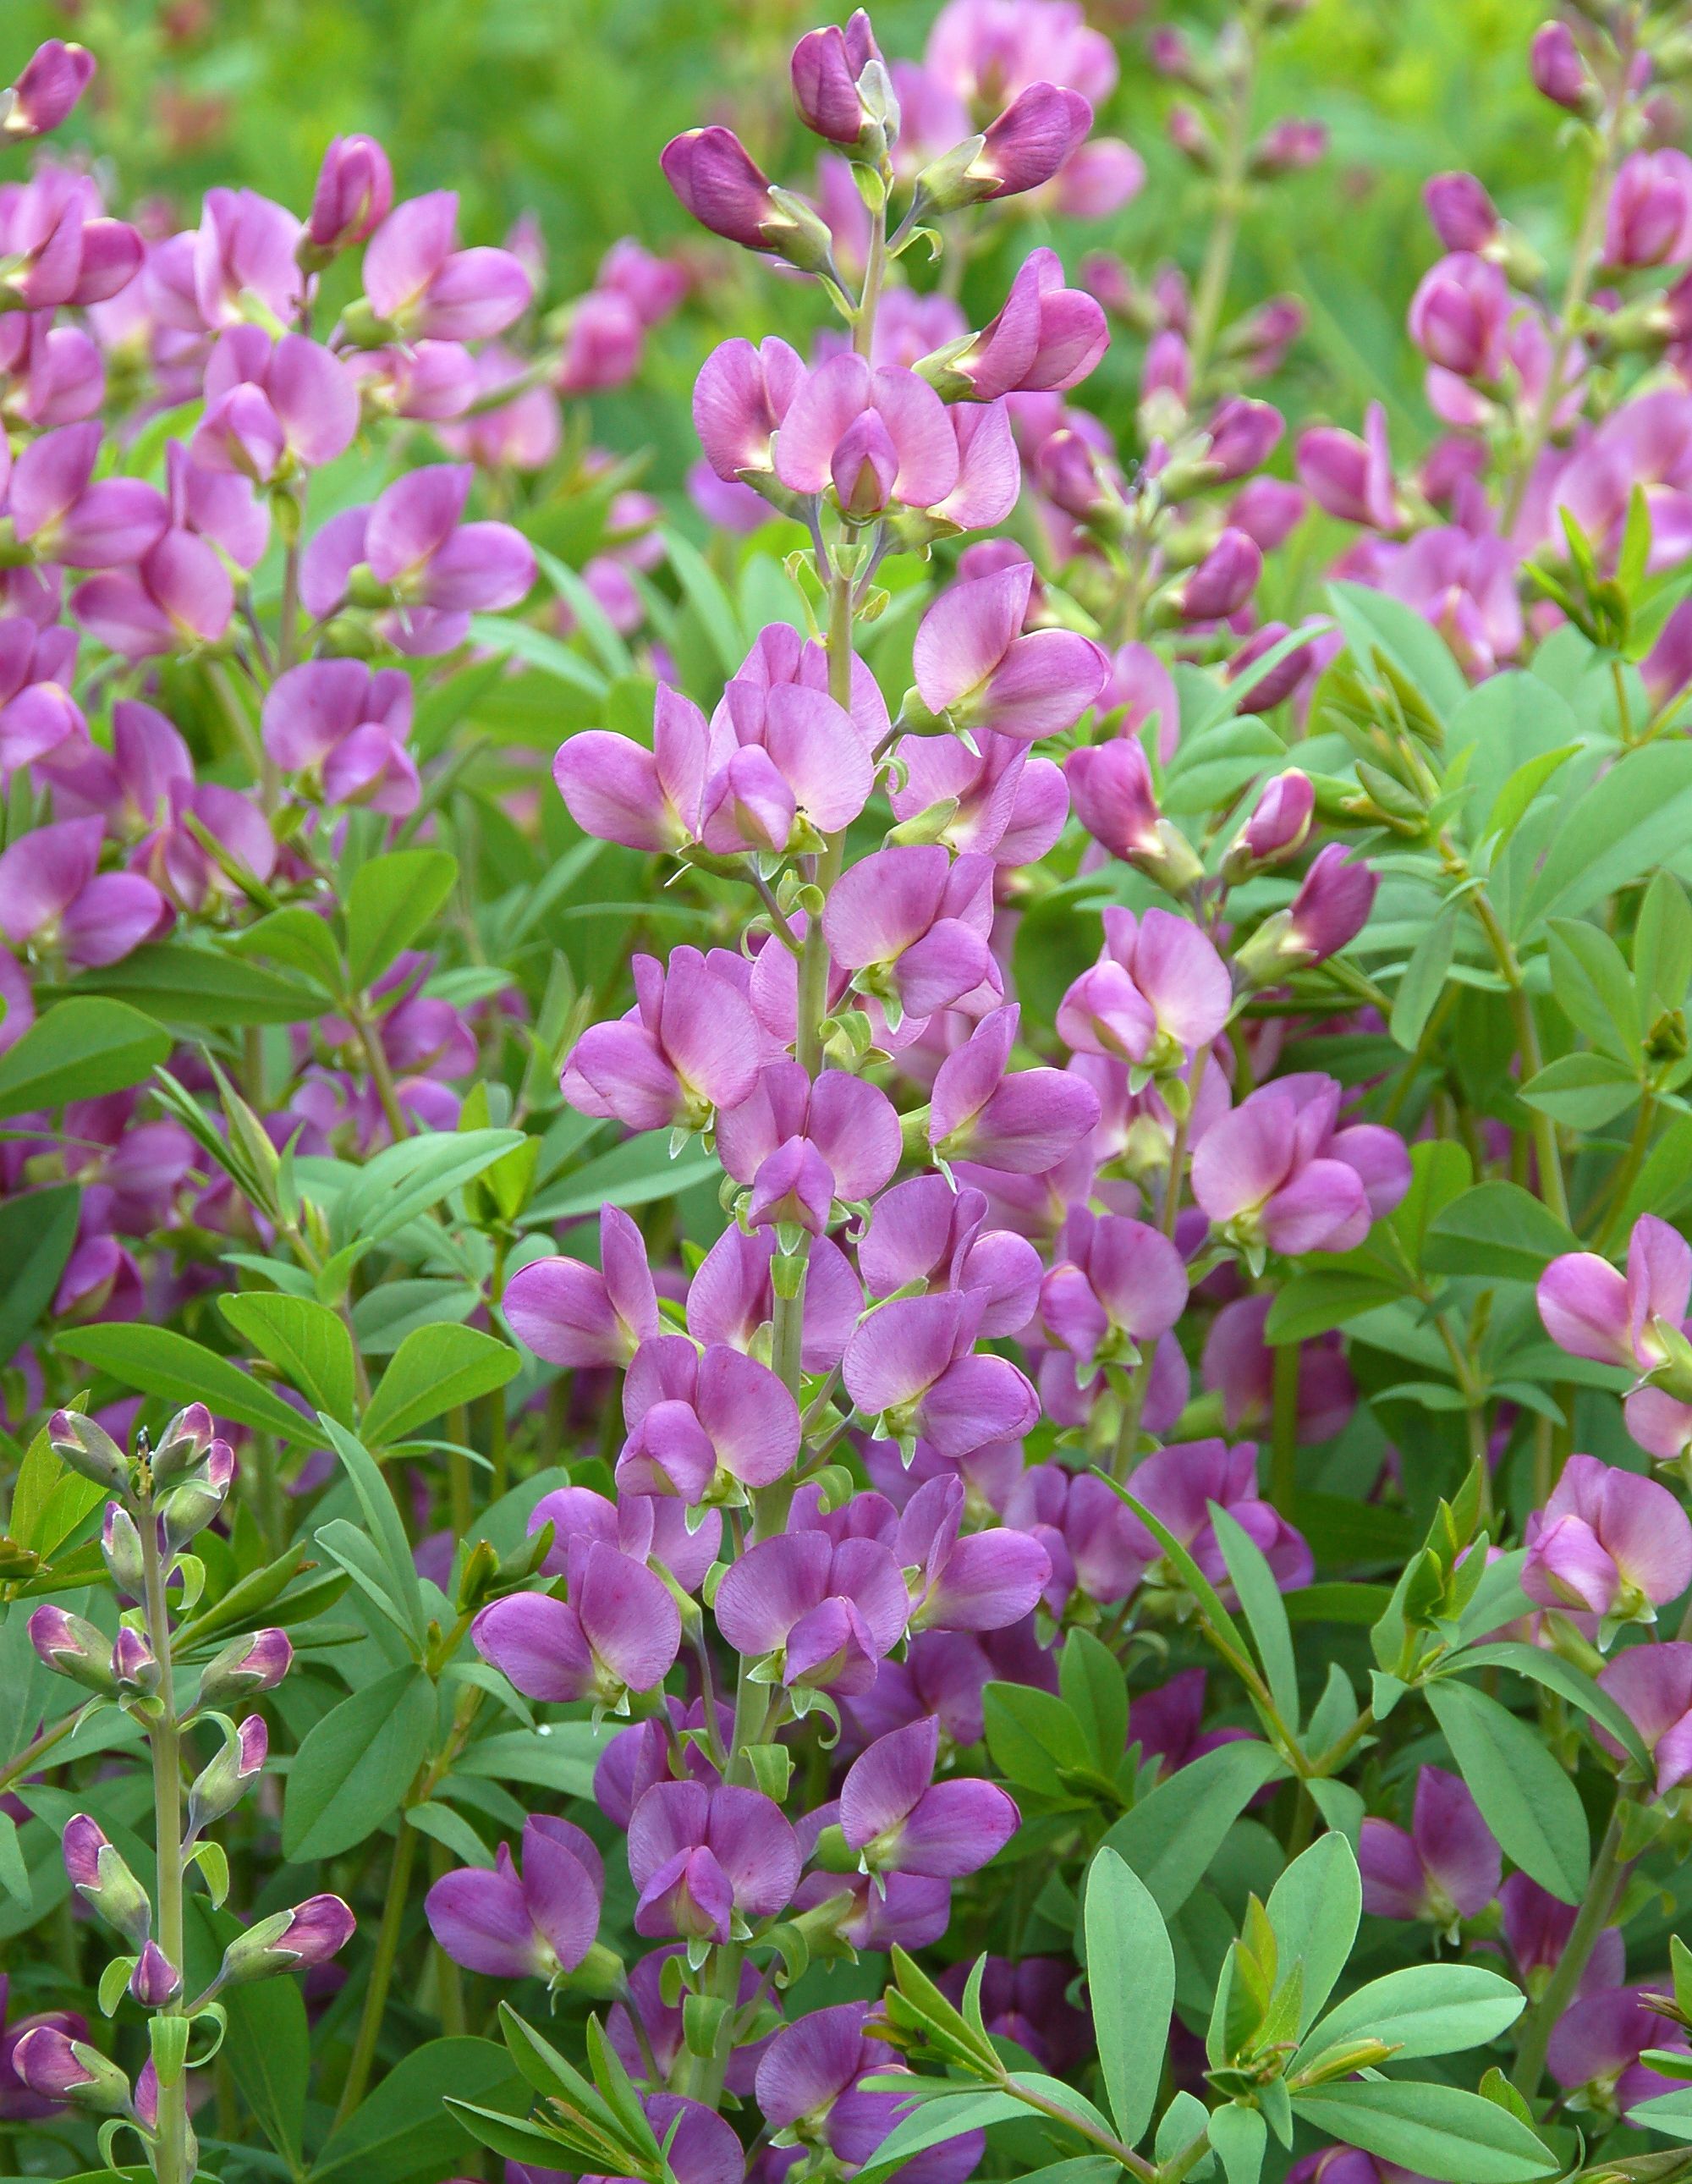 images/plants/baptisia/bap-lavendar-rose/bap-lavendar-rose-0006.jpg